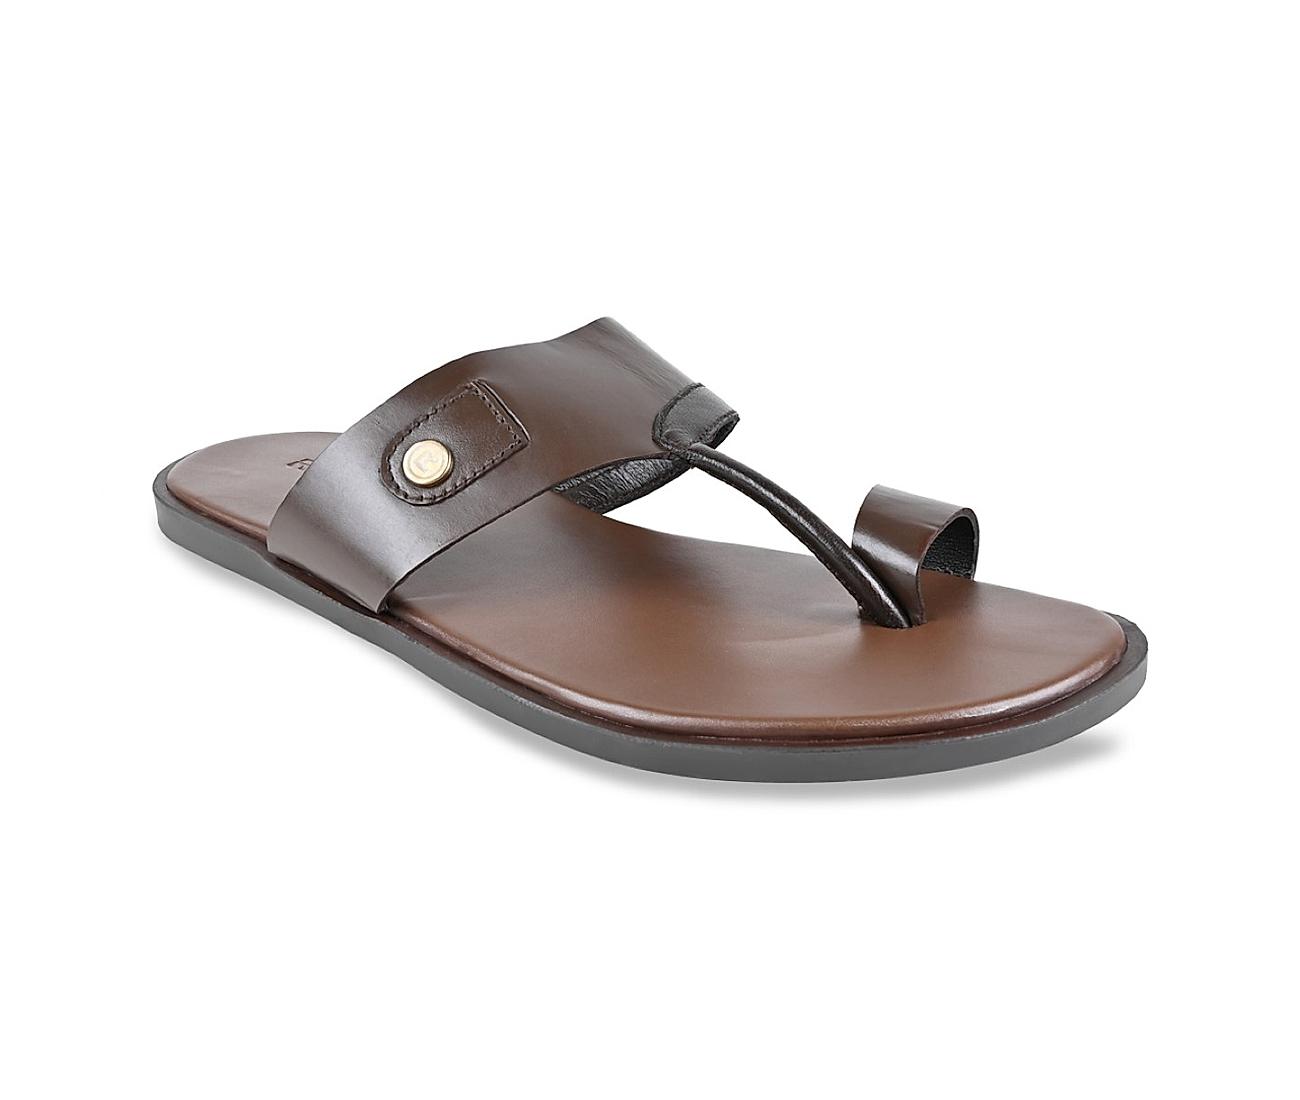 AXXD Flip-Flops Slippers,Men's Fashion Casual Sandals Shoes Outdoor Flip  Flops Beach Leisure Slippers For Men - Walmart.com